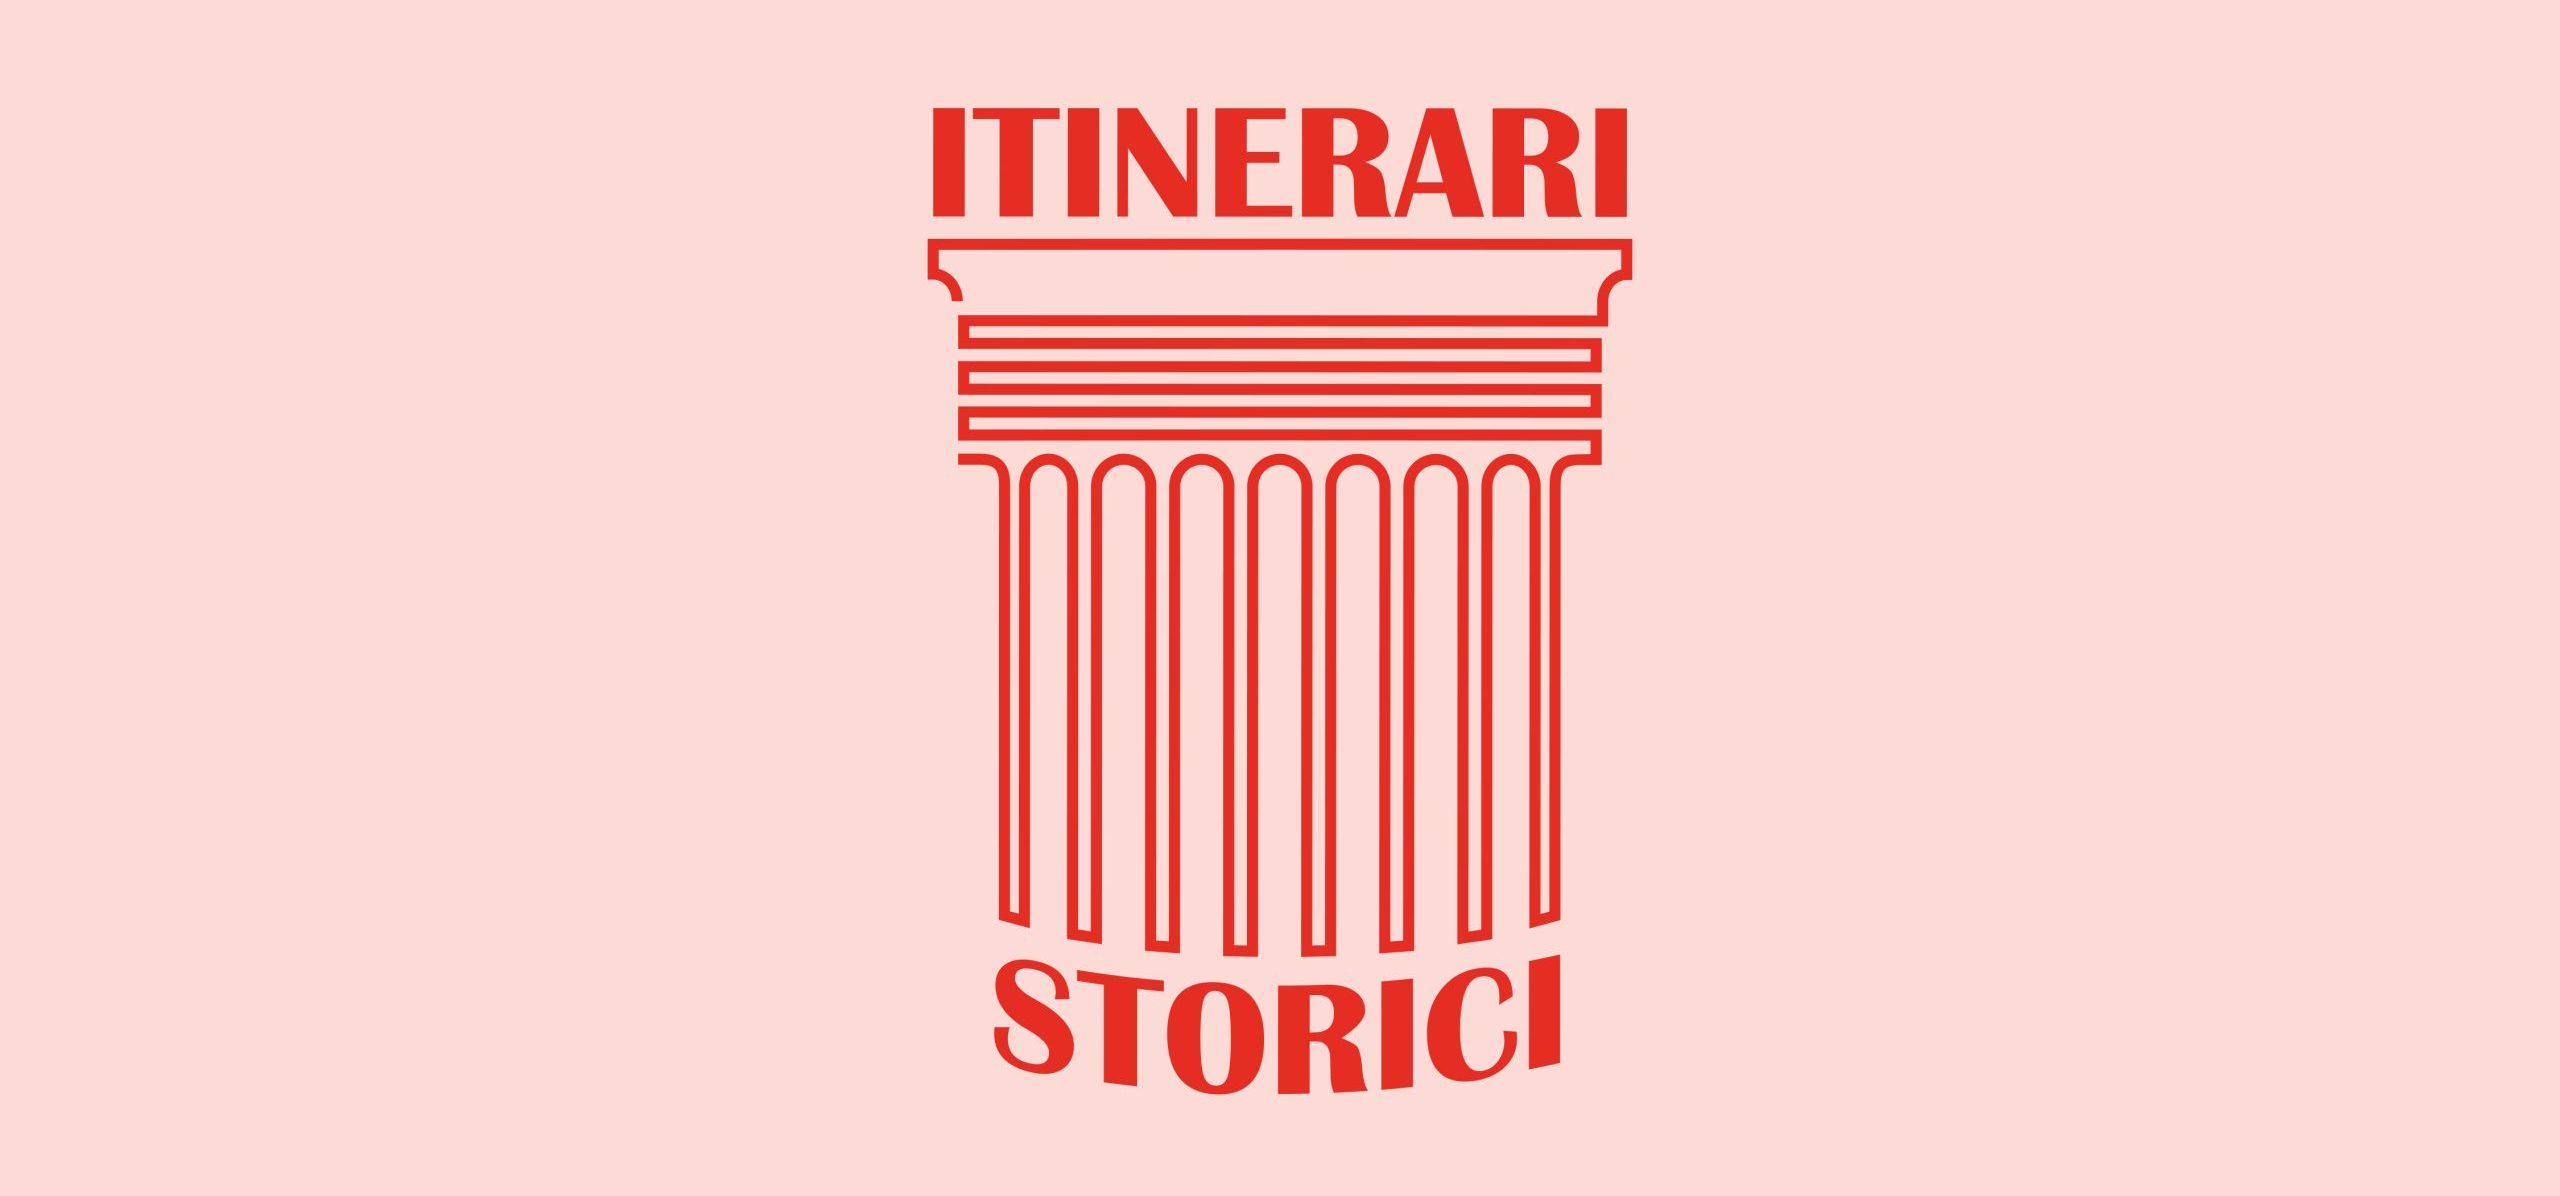 ITINERARI STORICI_POST